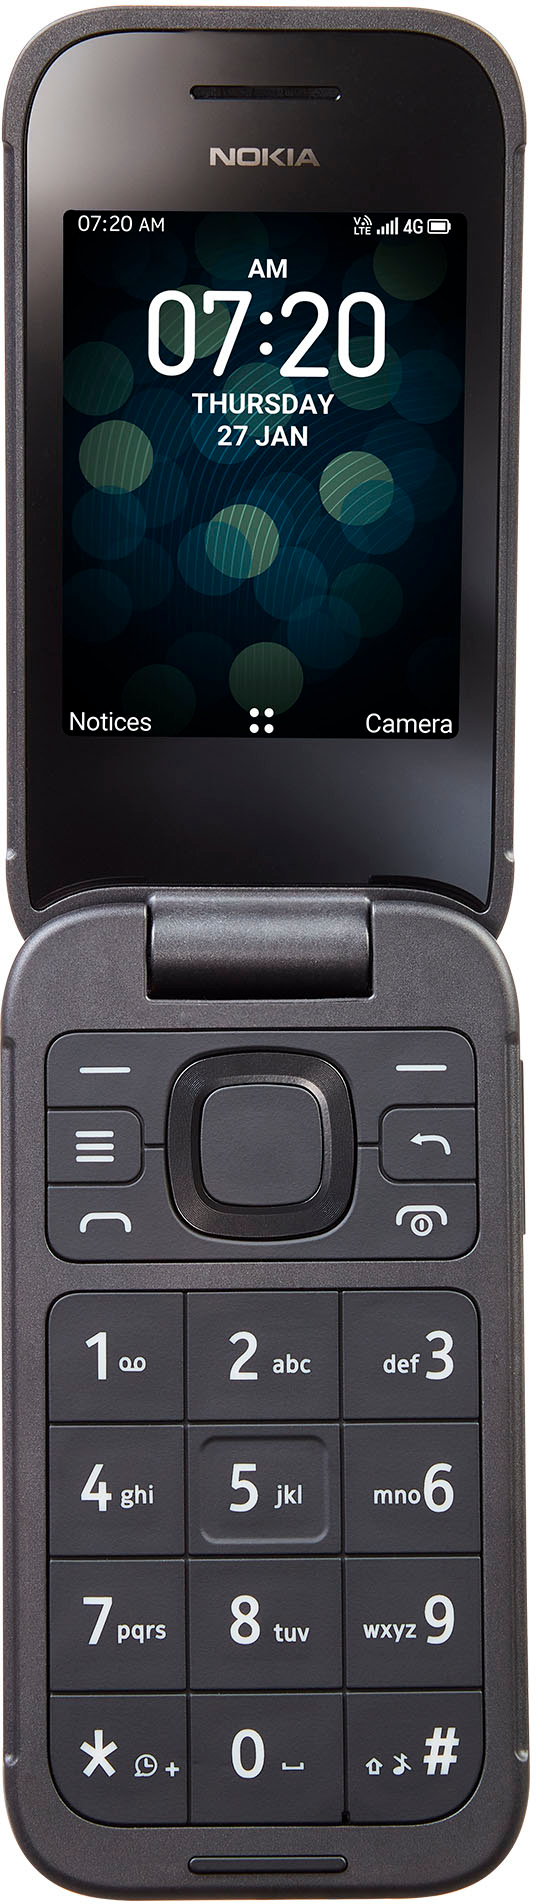 Nokia Flip Phones